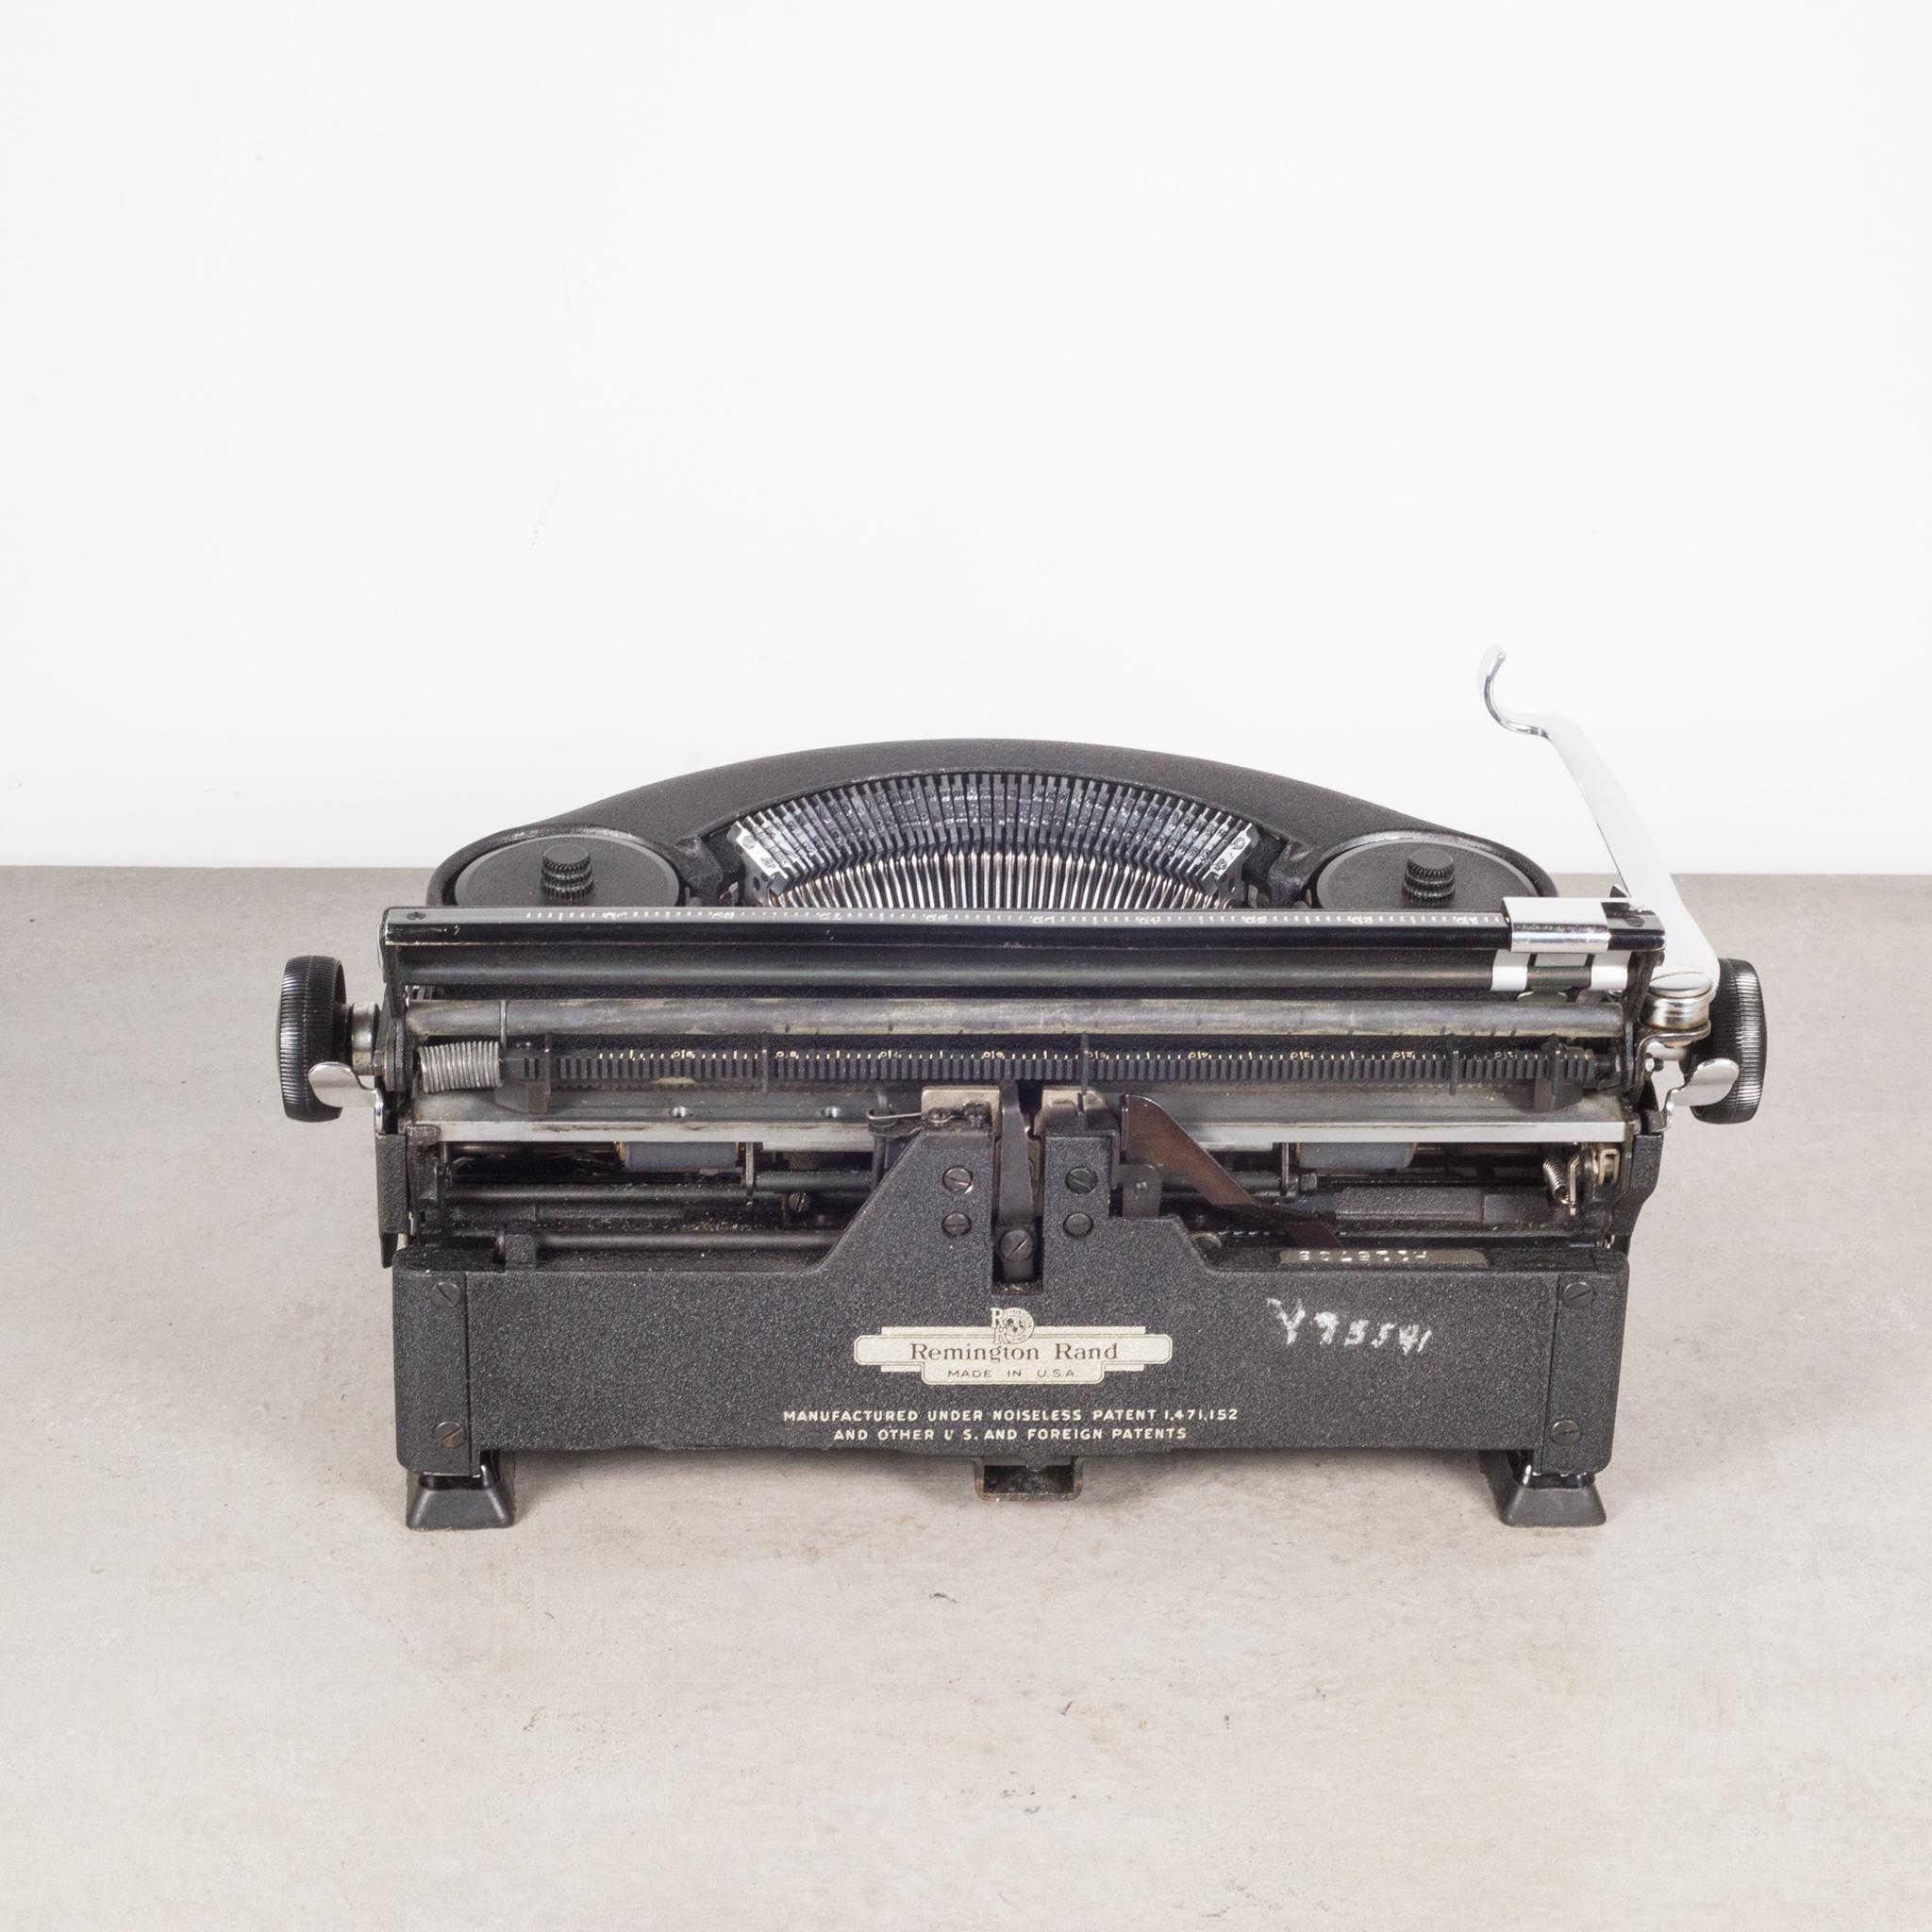 remington rand noiseless typewriter